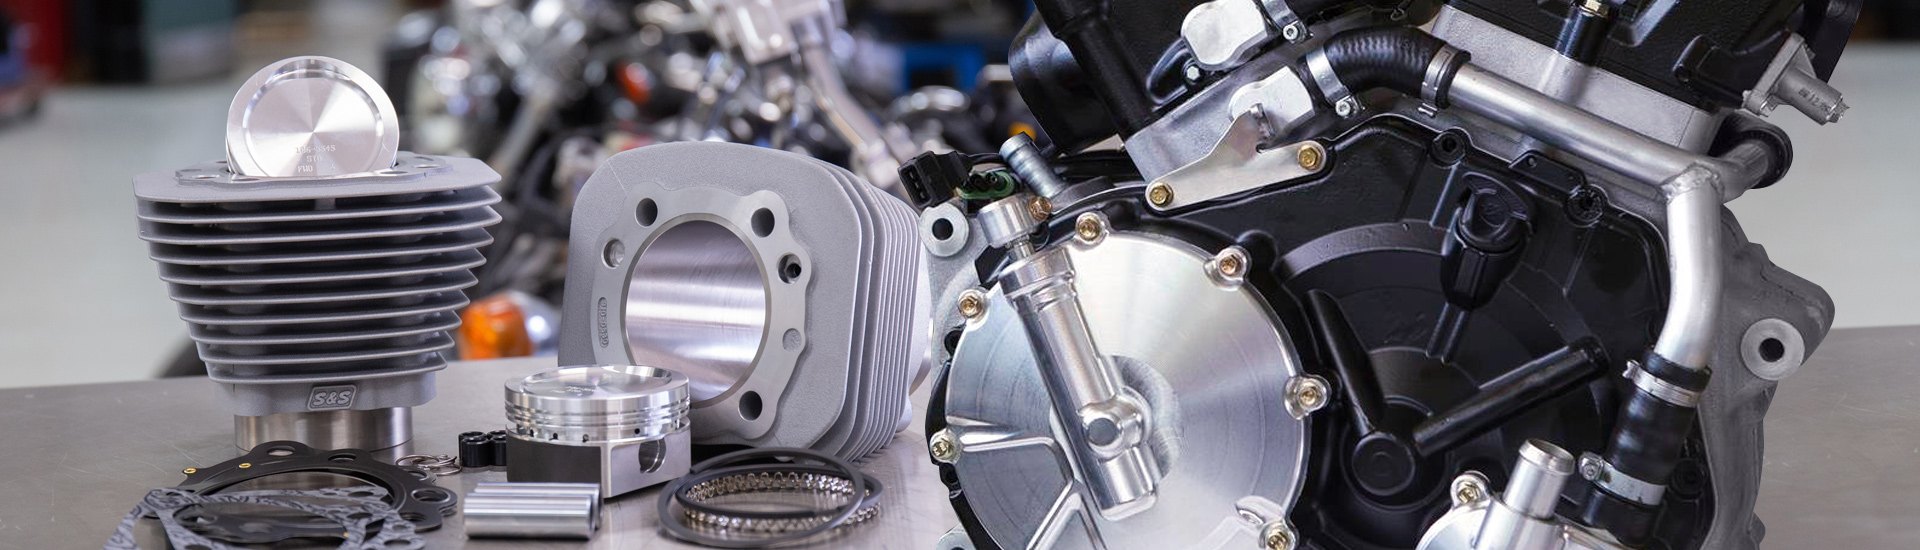 Kawasaki KX100 Engine Parts | Pistons & Camshafts - MOTORCYCLEiD.com